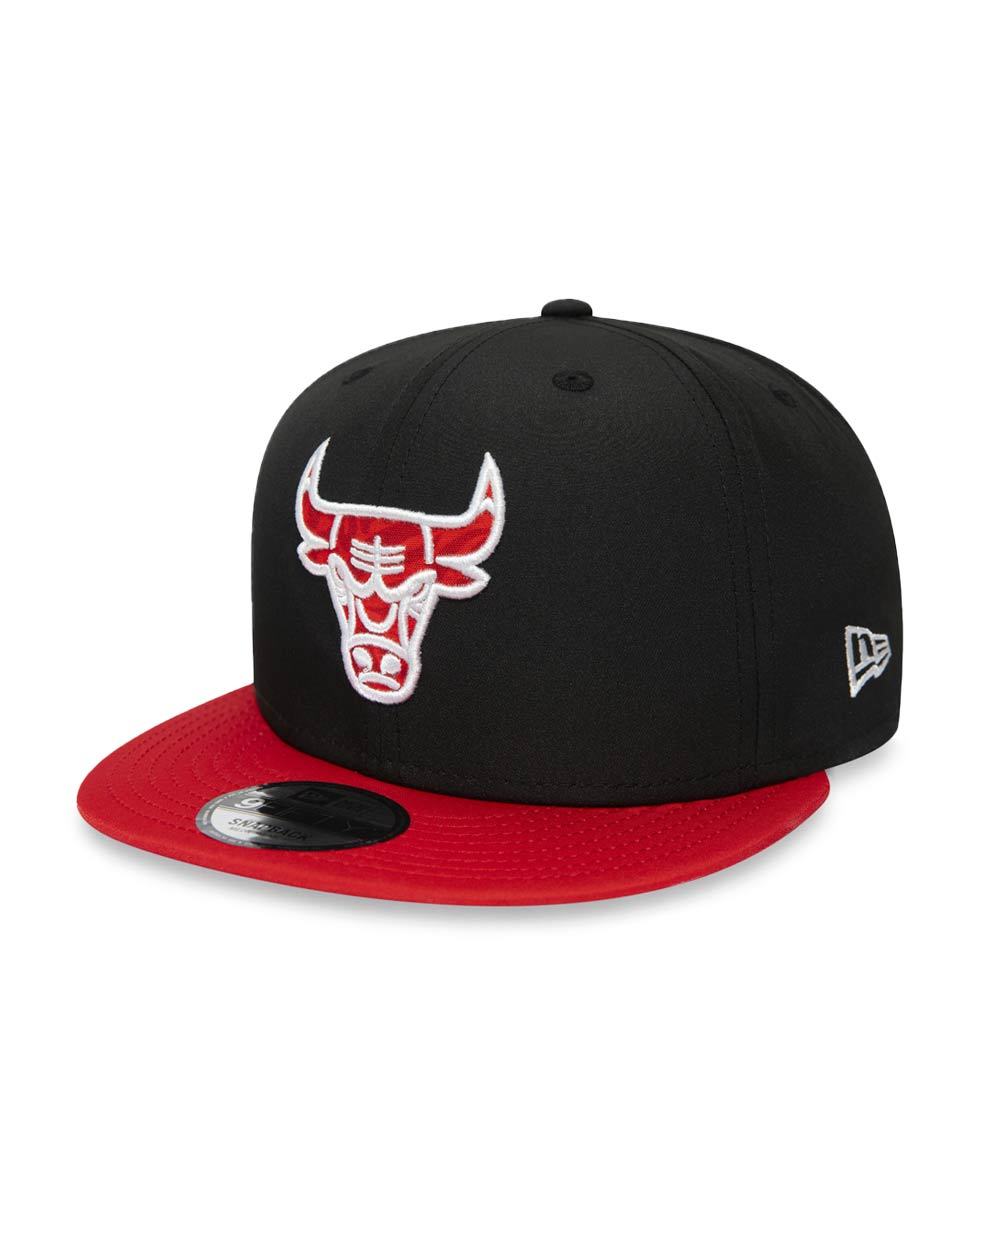 New Era 9FIFTY Chicago Bulls Team Cap